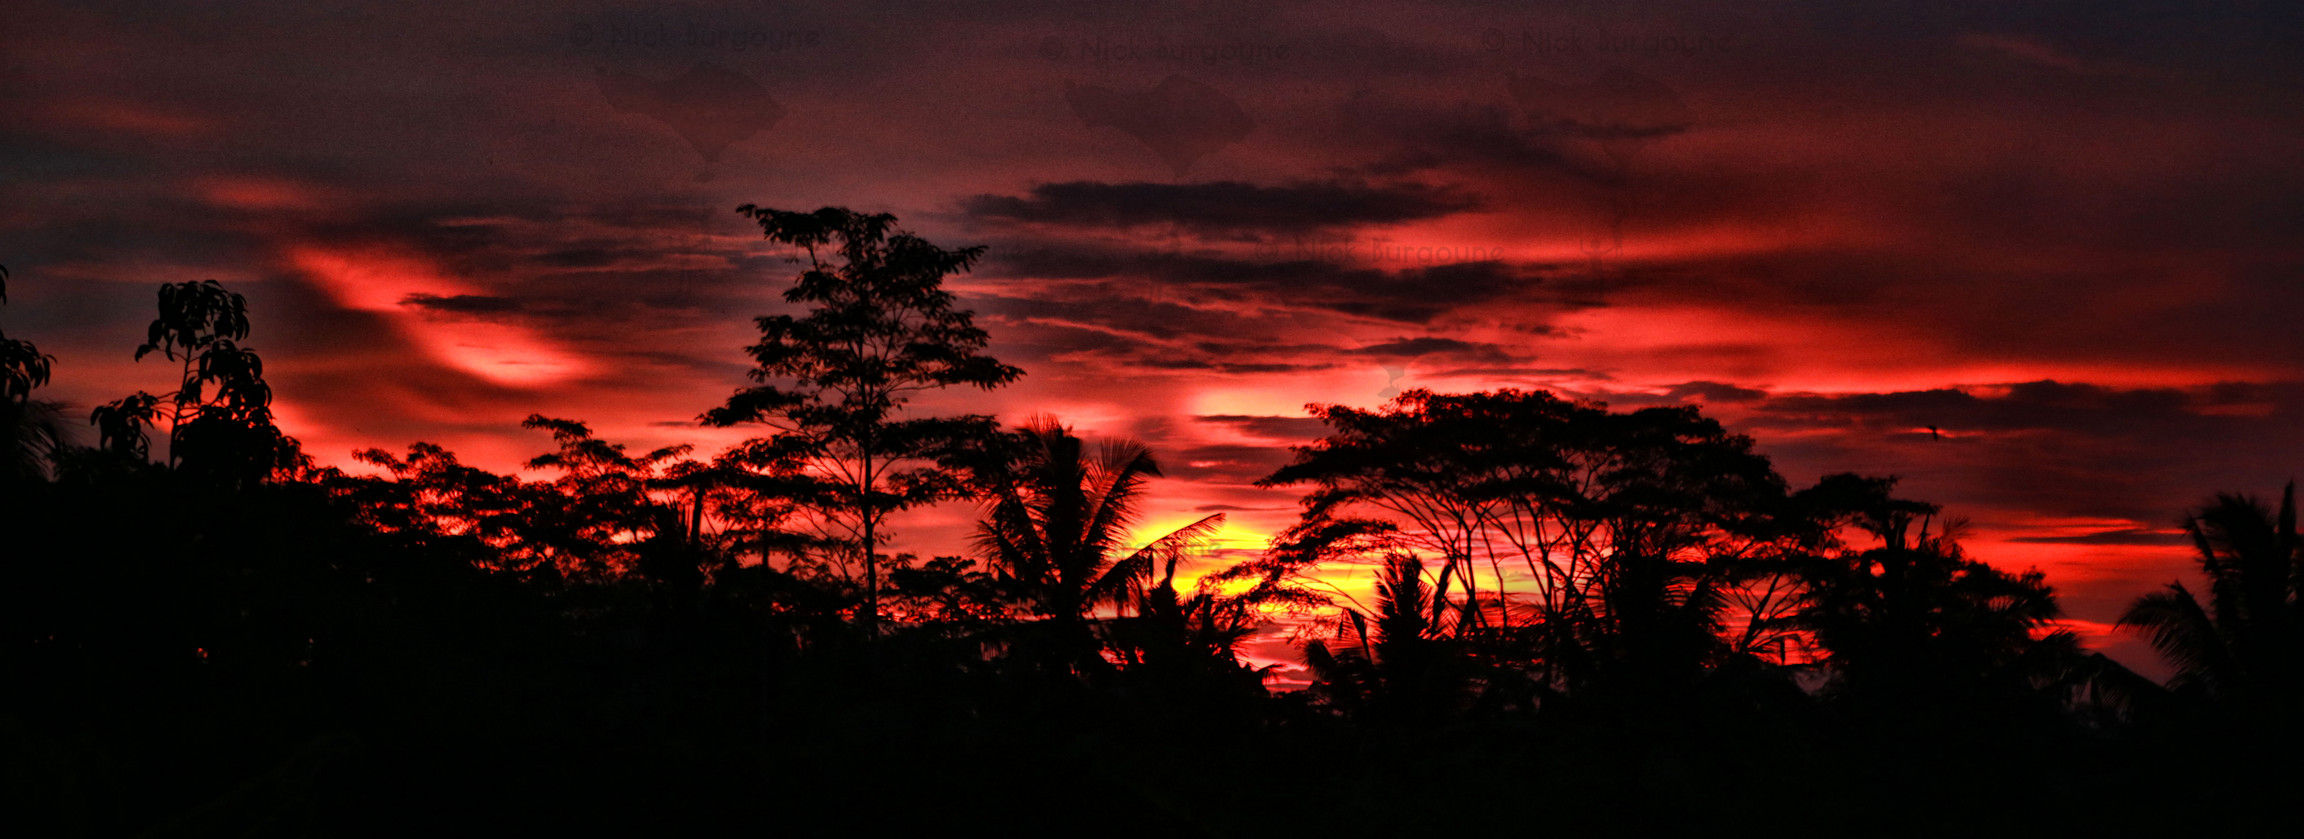 	Sky On Fire Sunset - Marga	 